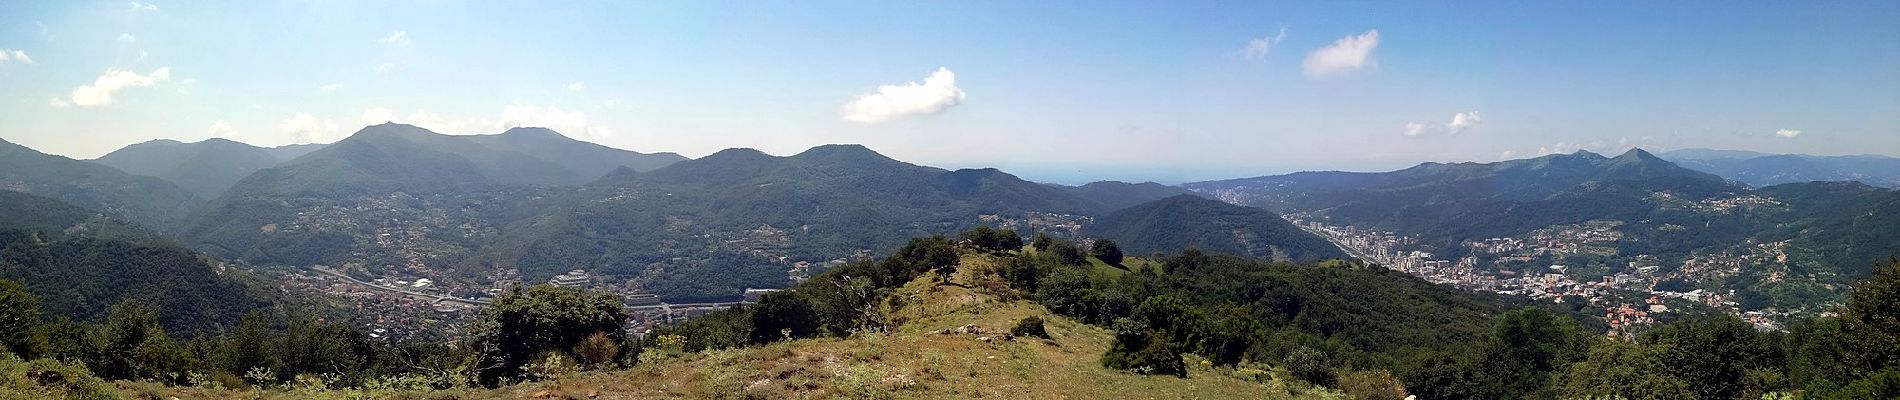 Randonnée A pied Gênes - Anello Acquedotto Storico di Genova (AQ2) - Photo